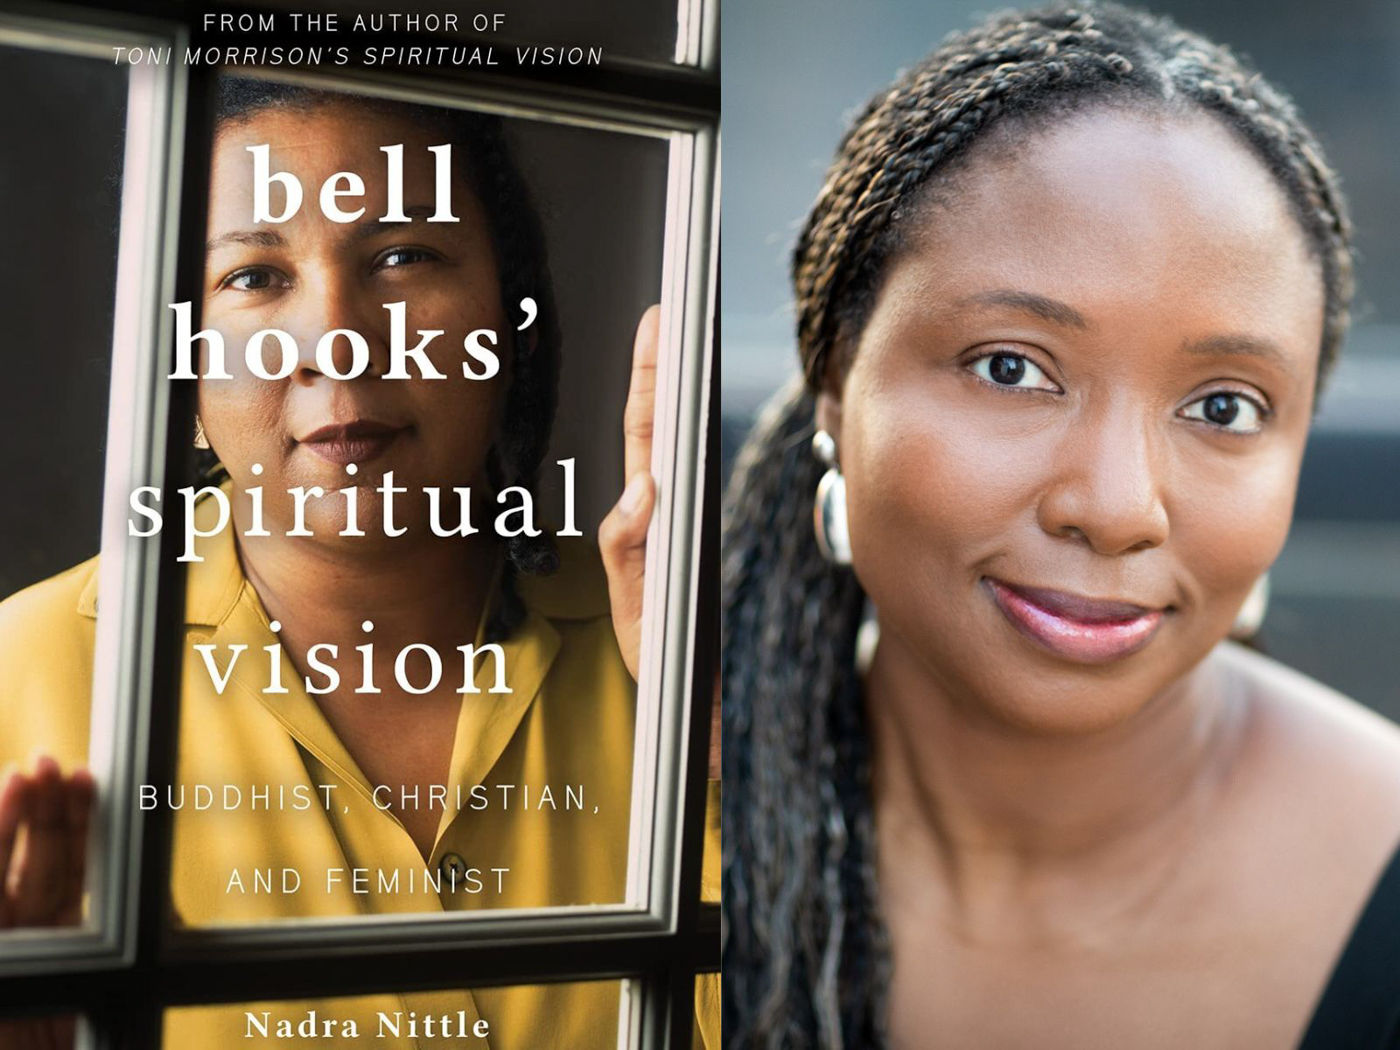 The Spiritual Lives of bell hooks